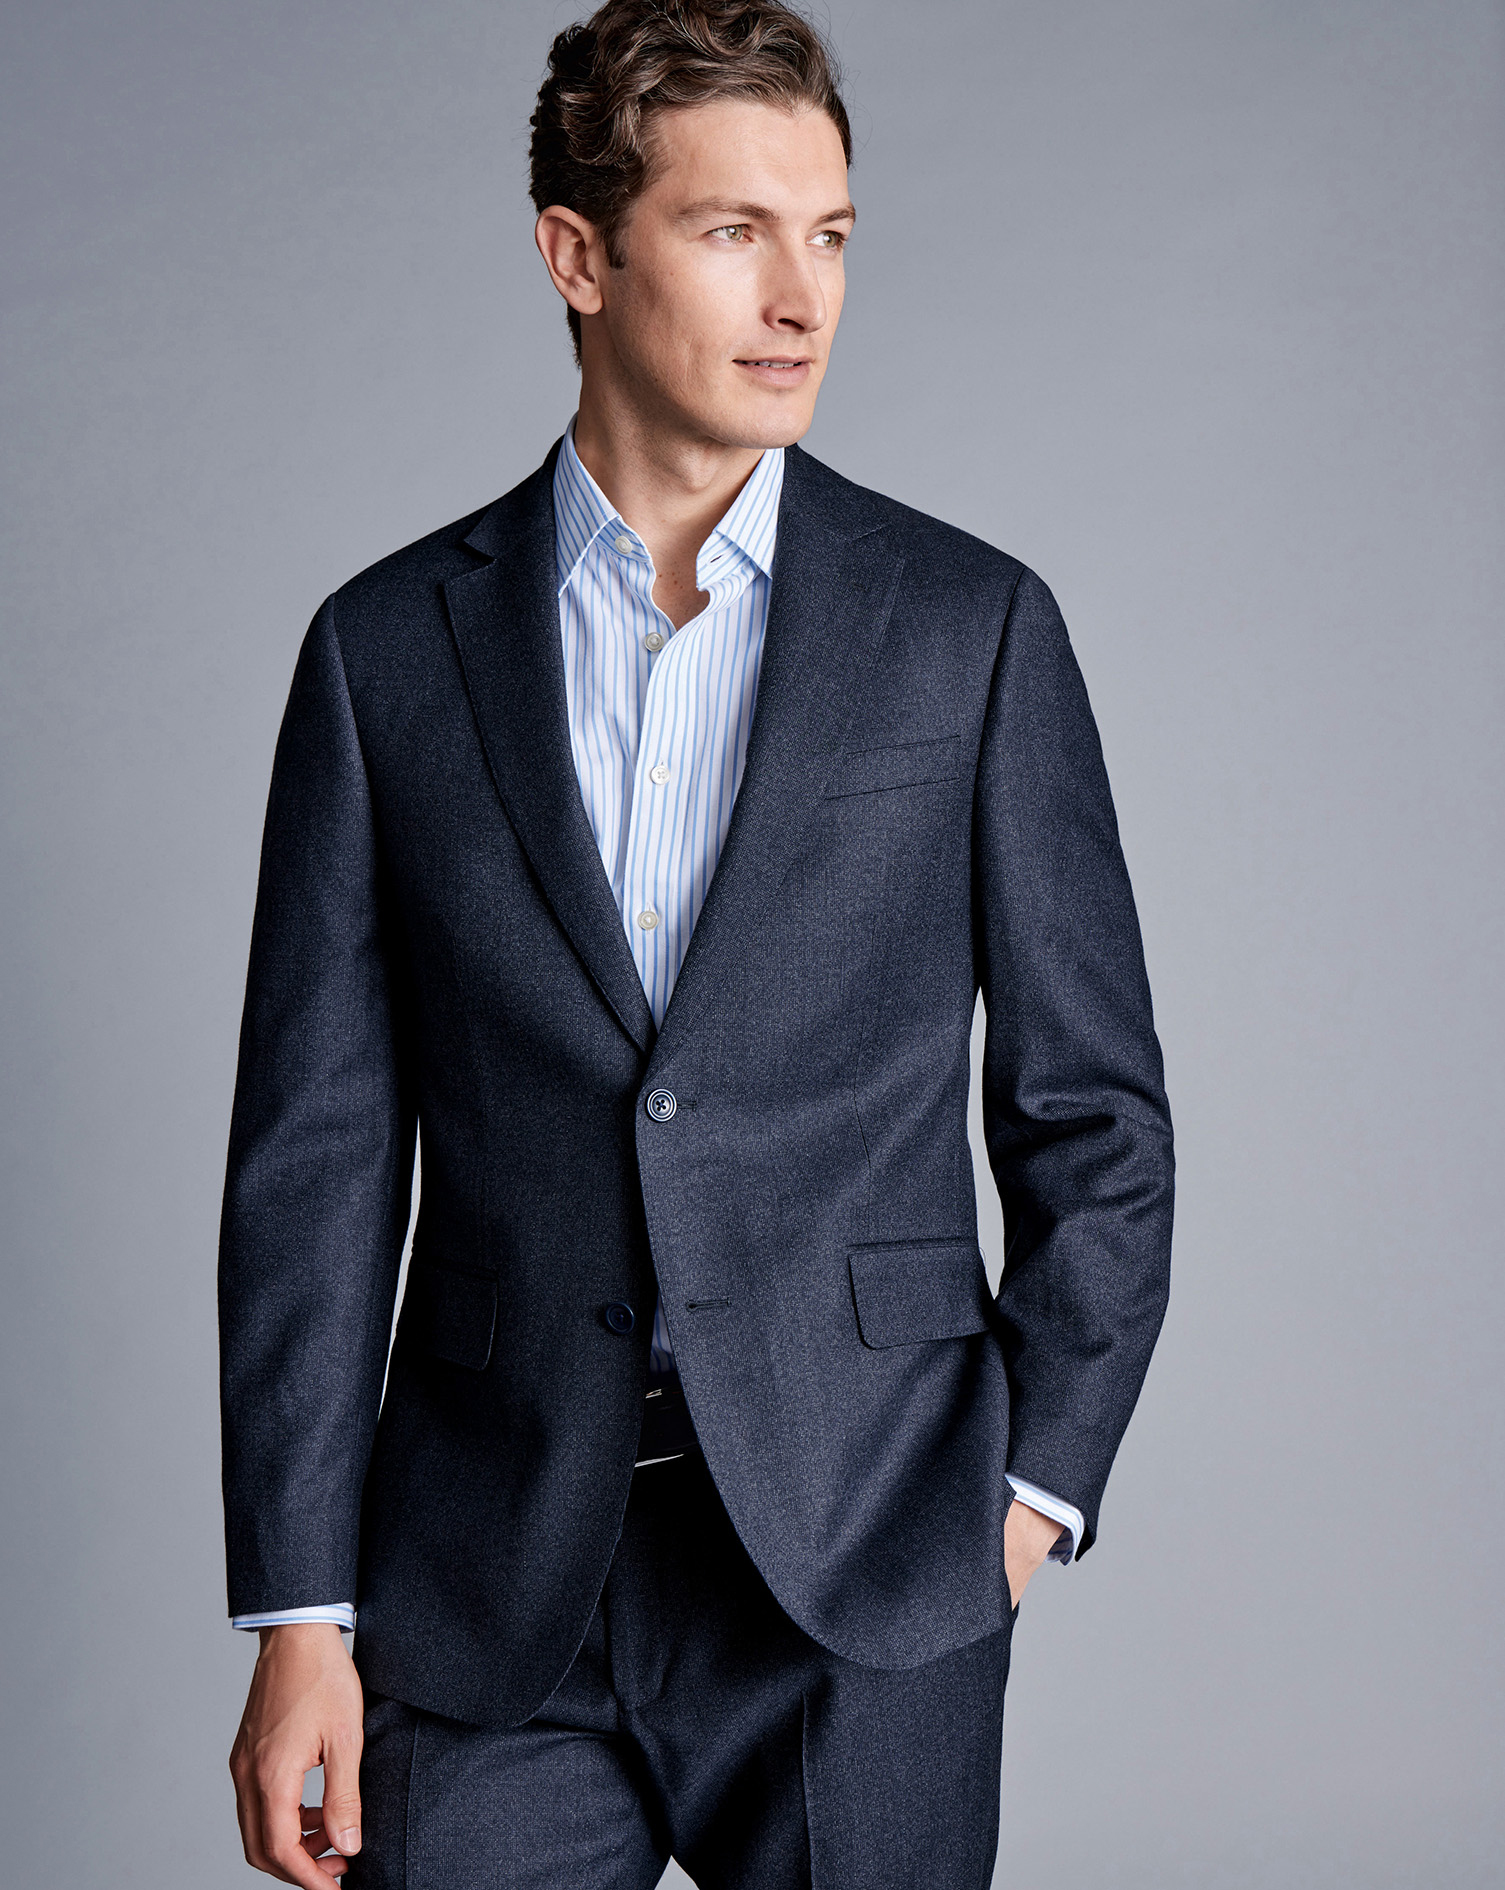 Men's Charles Tyrwhitt Italian Pindot Suit na Jacket - Denim Blue Size 36R Wool
